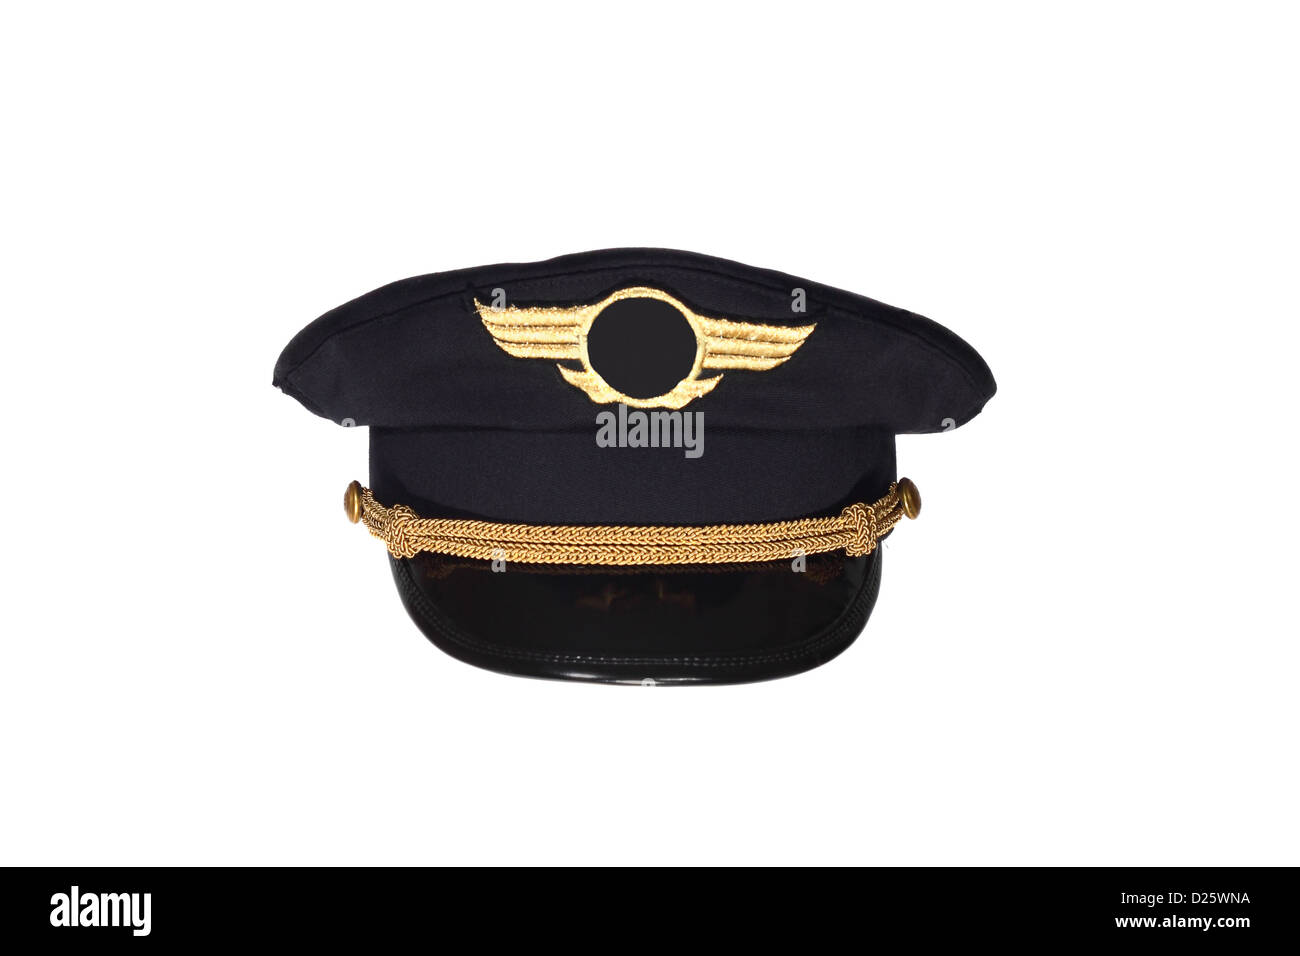 Sombrero de pilotos fotografías e imágenes de alta resolución - Alamy